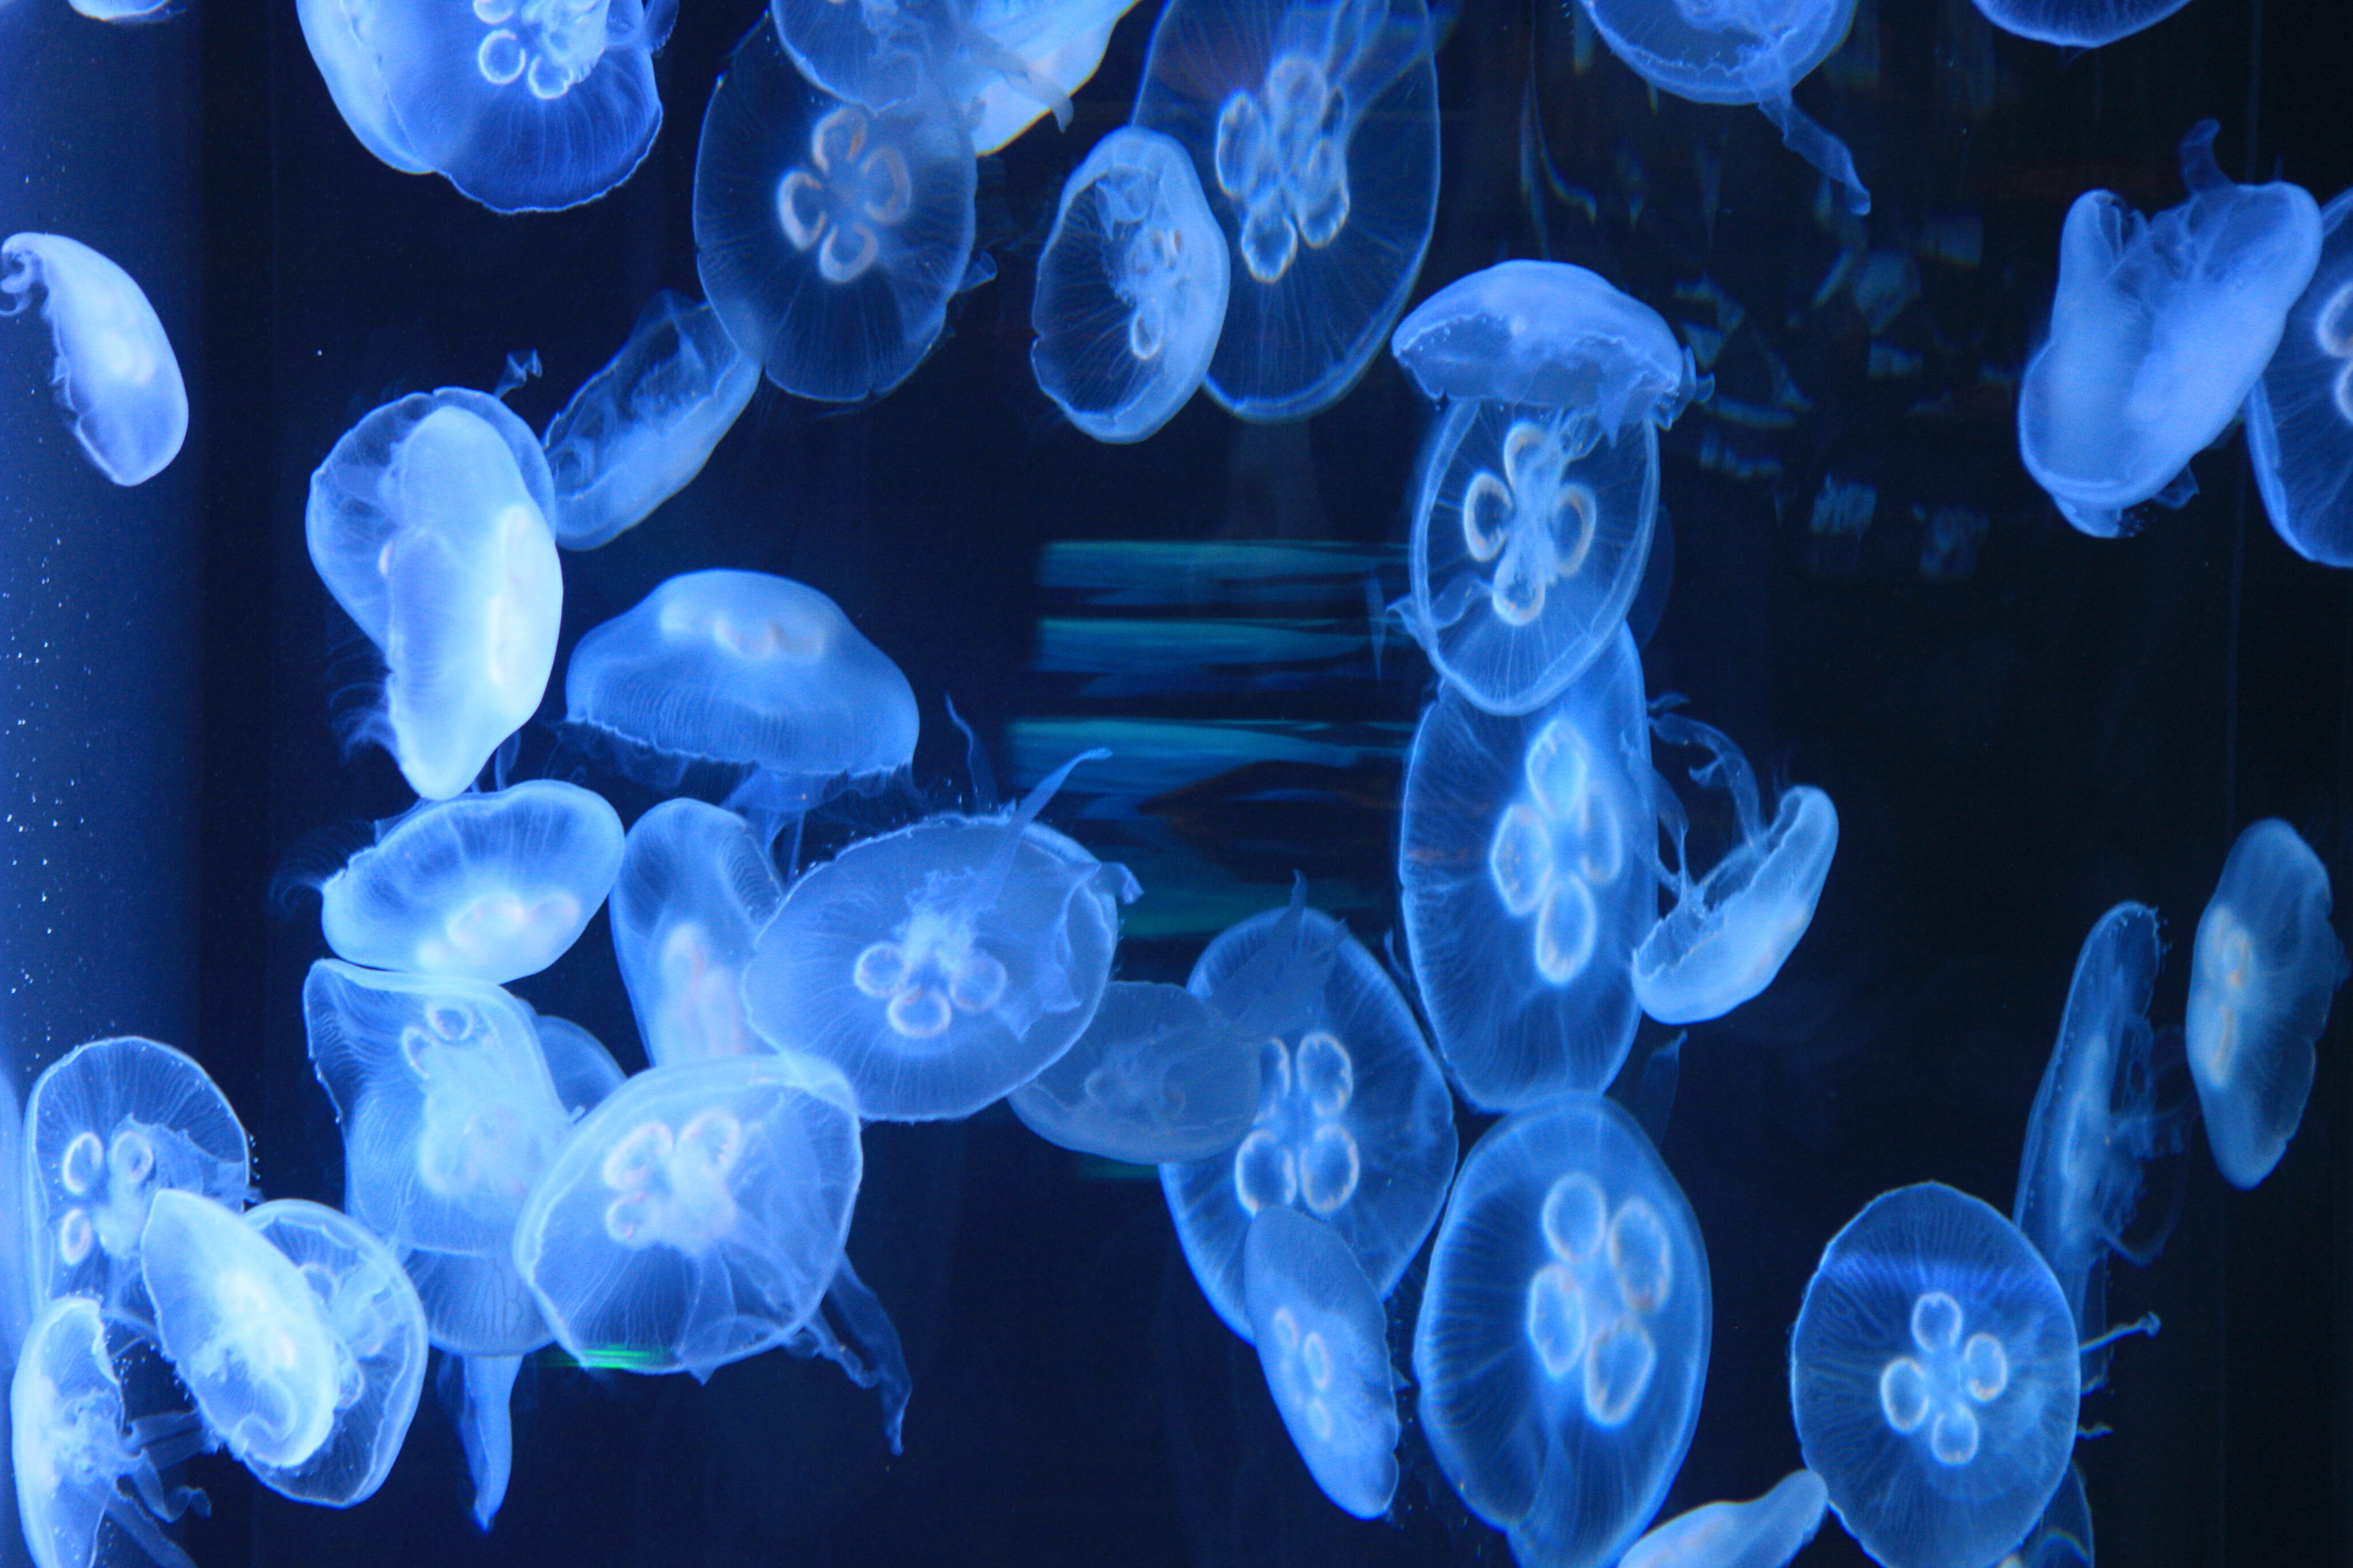 Do pesticides negatively affect moon jellyfish?